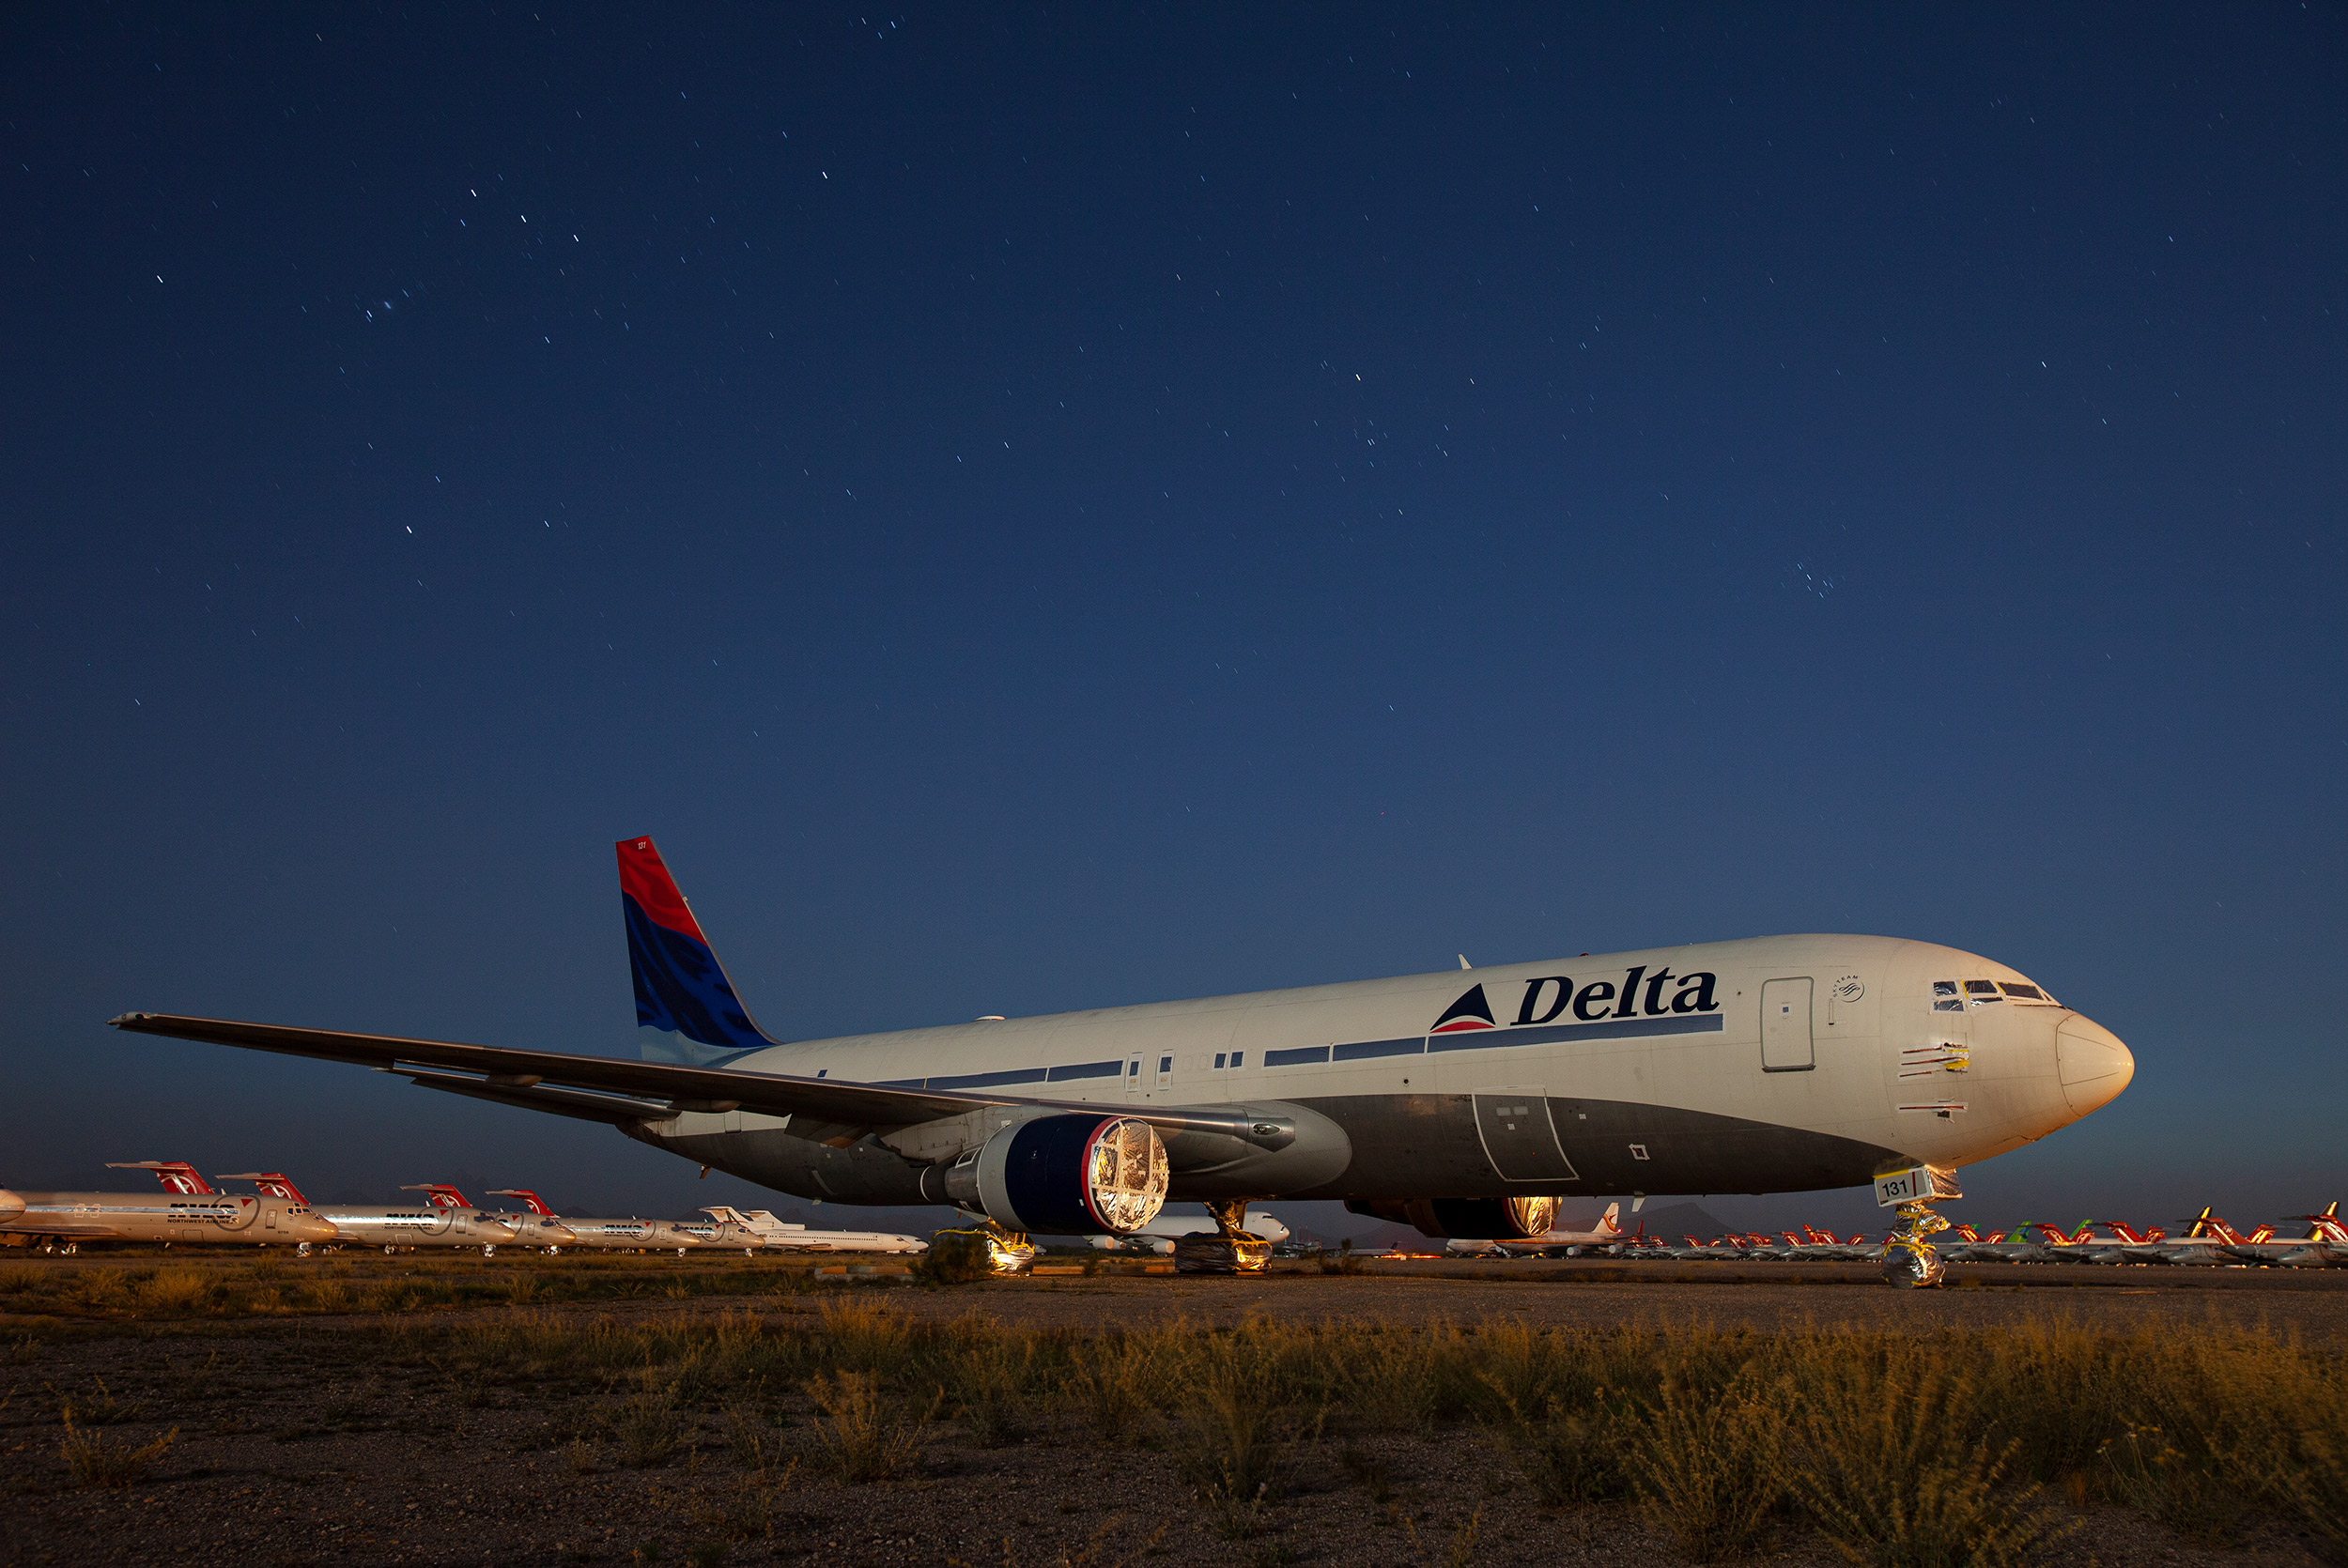 Delta 767 at night - Steve Craft Photography, Phoenix, Arizona based Advertising, Corporate & Aviation Photographer